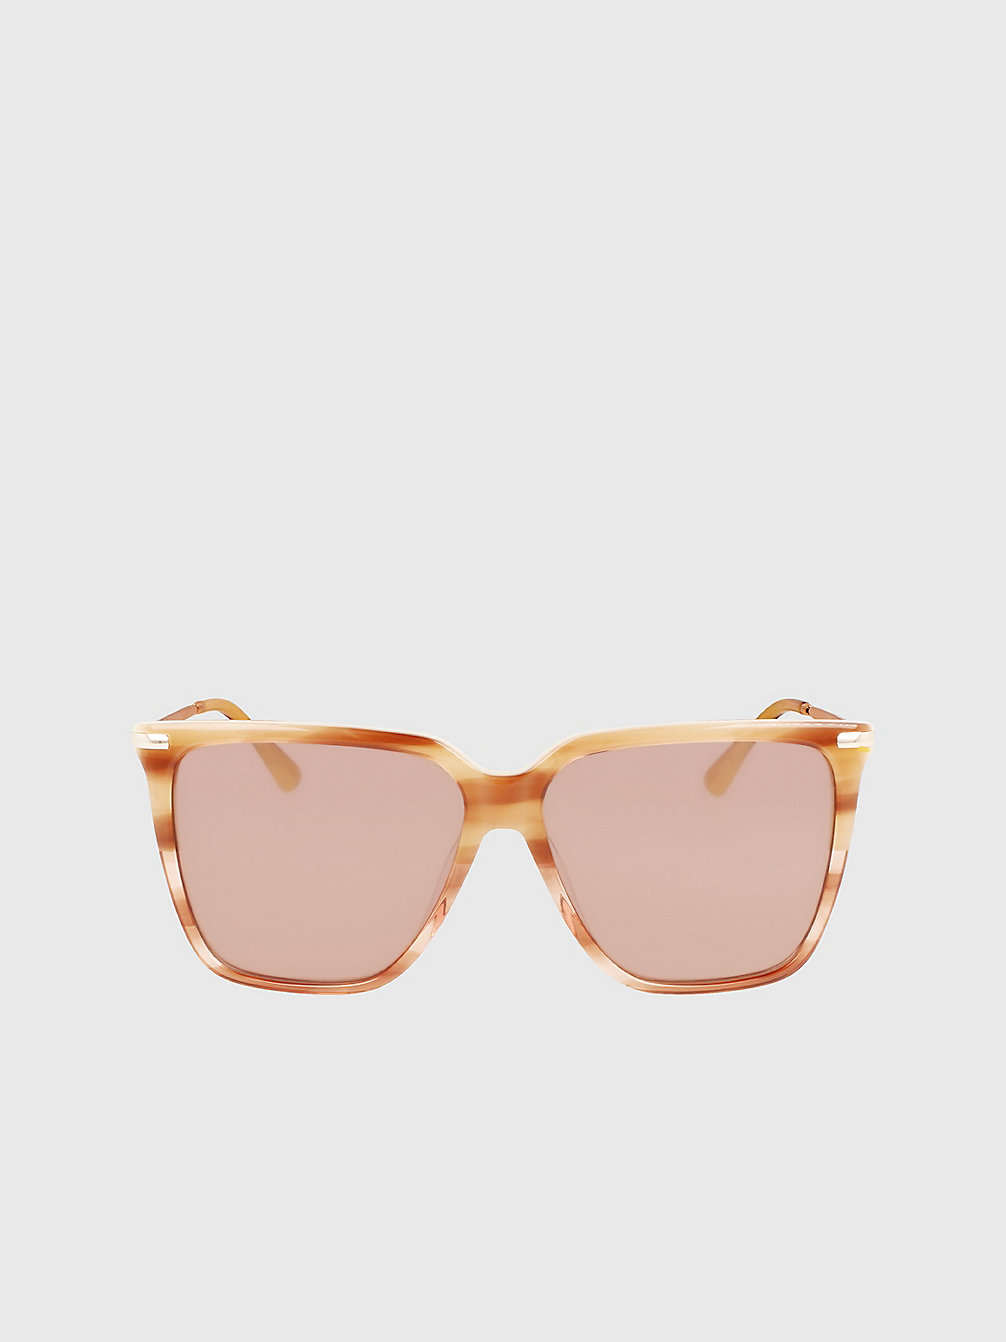 STRIPED BROWN > Прямоугольные солнцезащитные очки Ck22531s > undefined Женщины - Calvin Klein